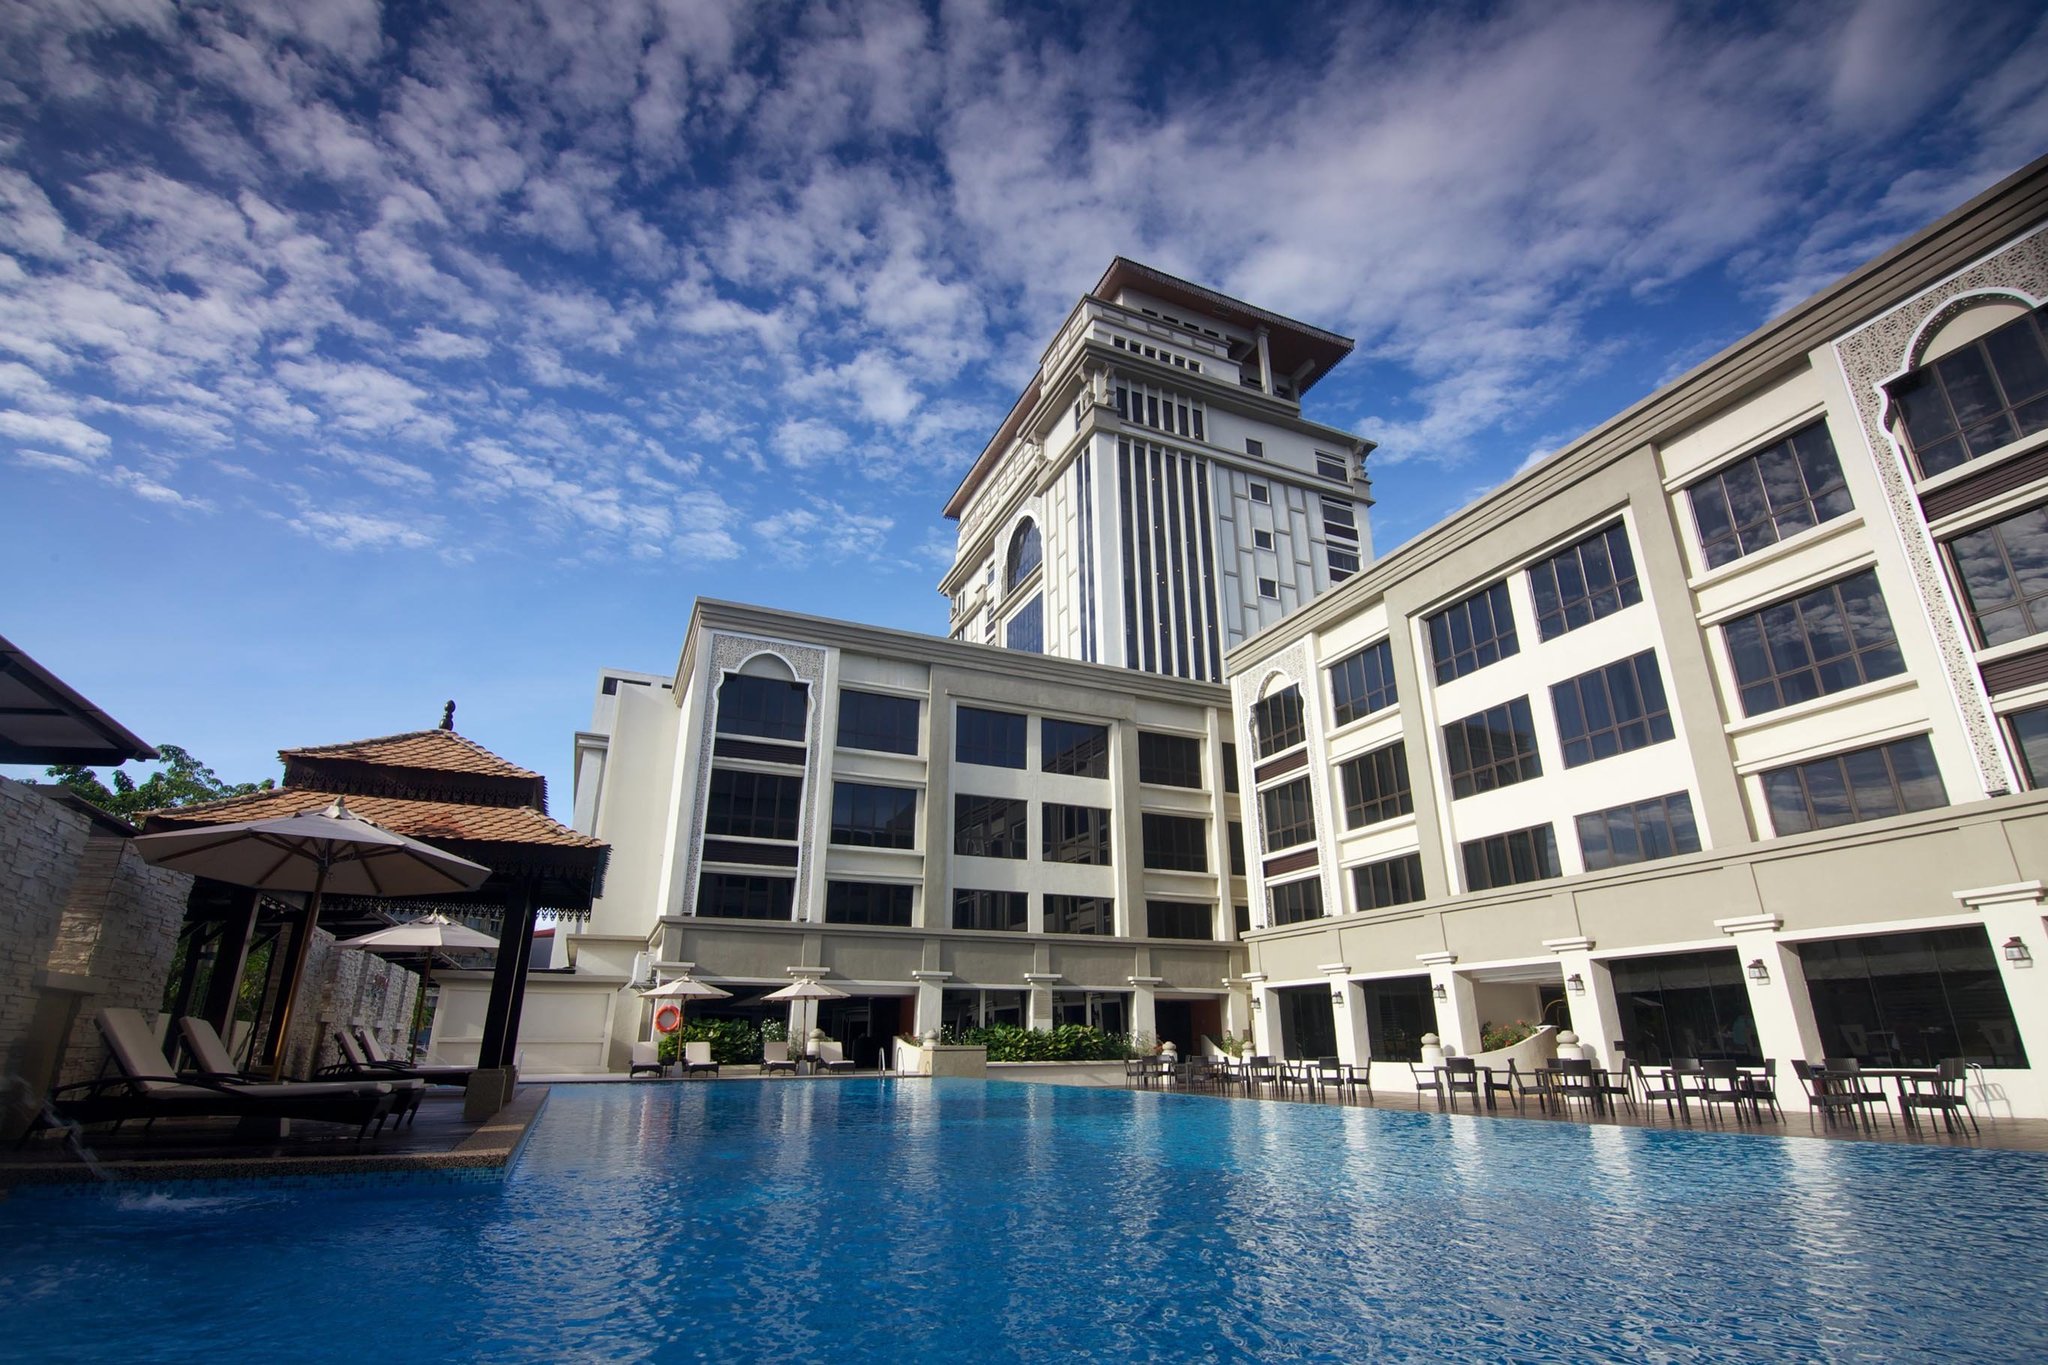 Hotel Perdana Kota Bharu